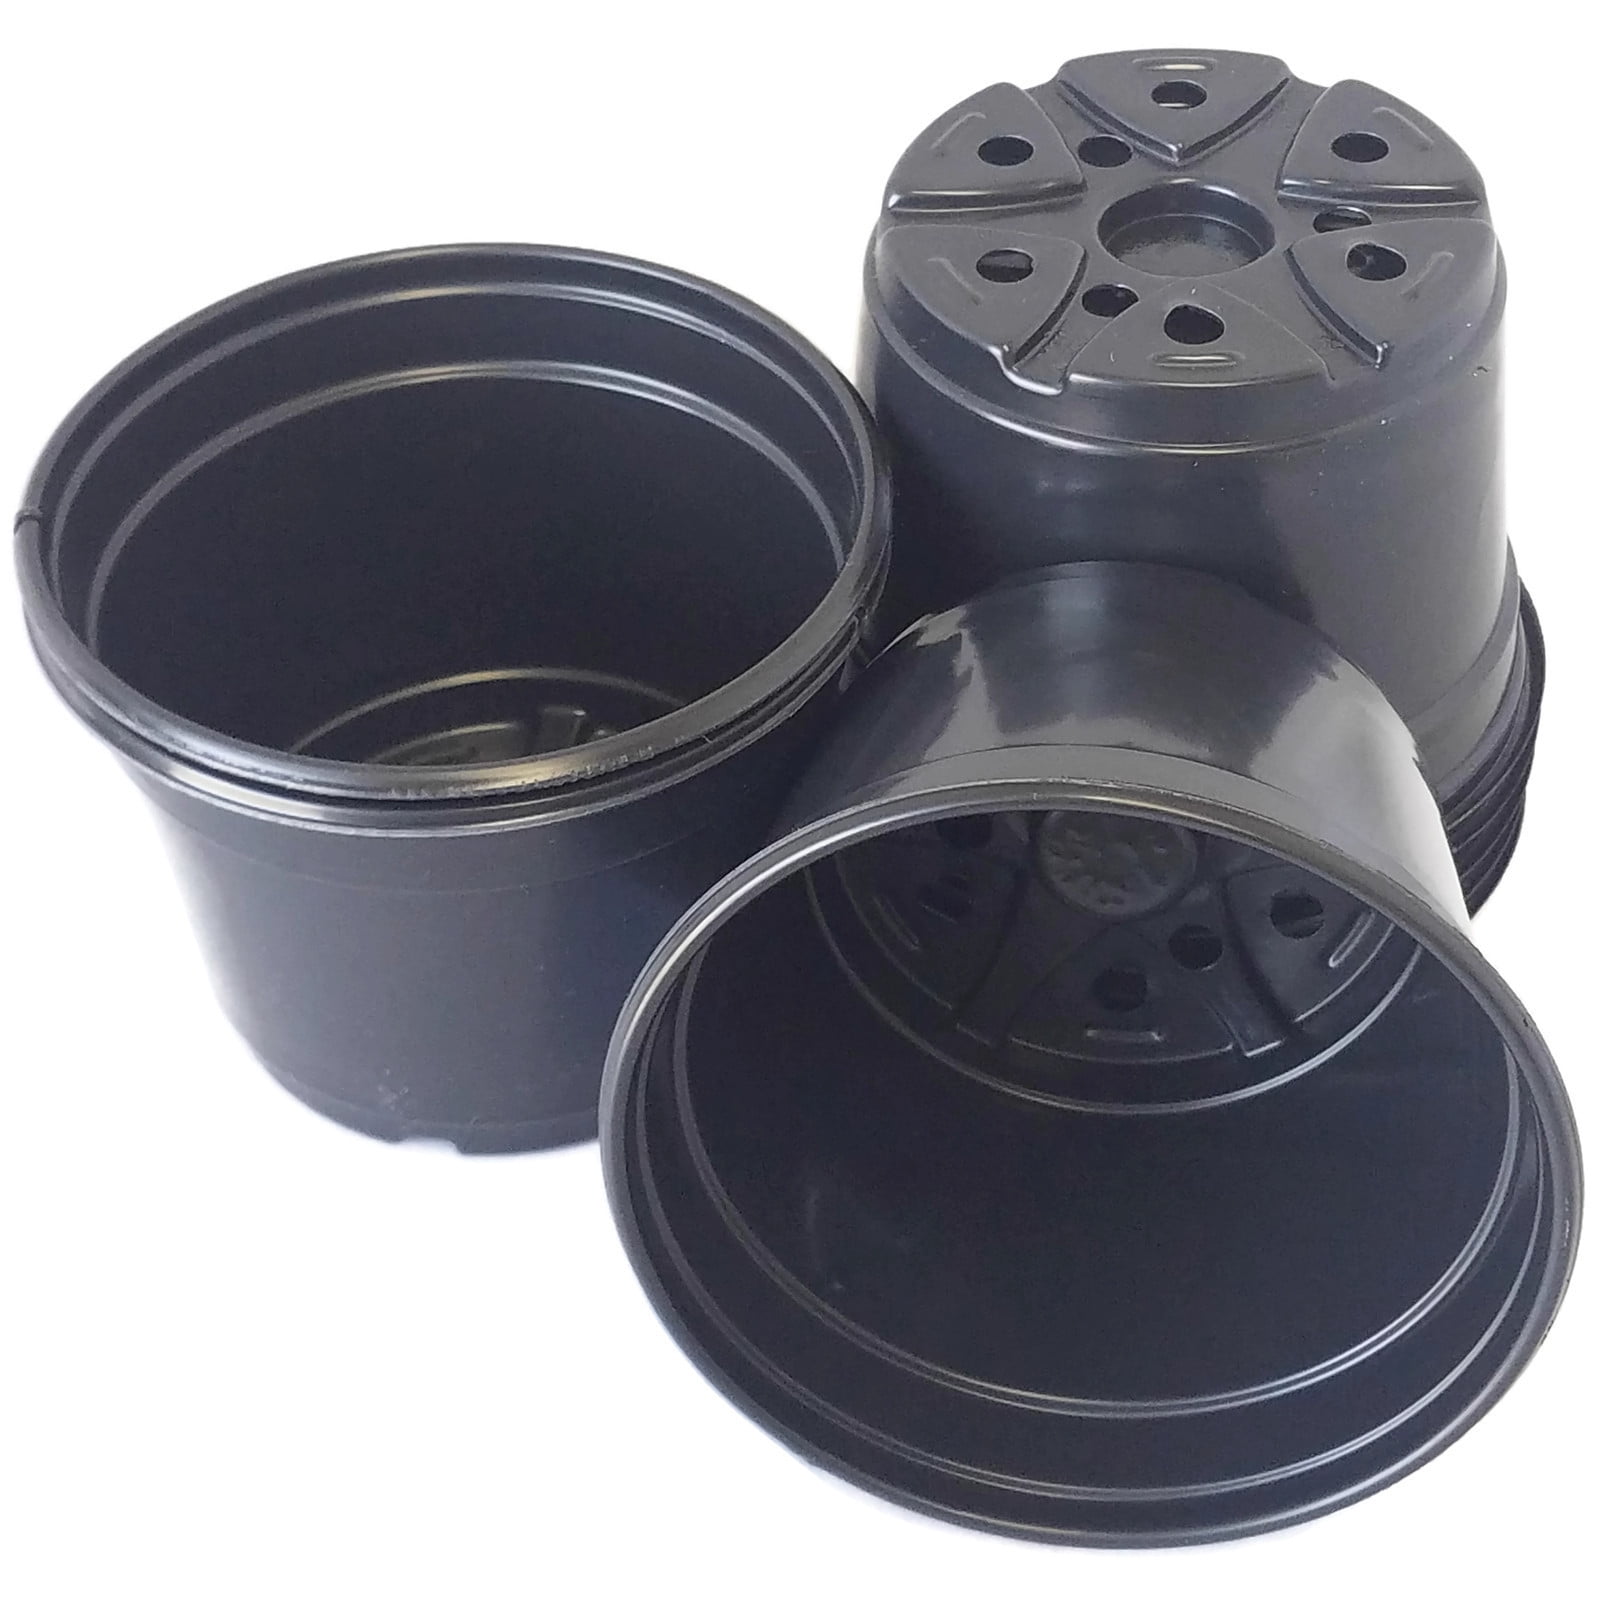 Black Plastic Starter Pot for Plants 4 inch Diameter Quantity 5 